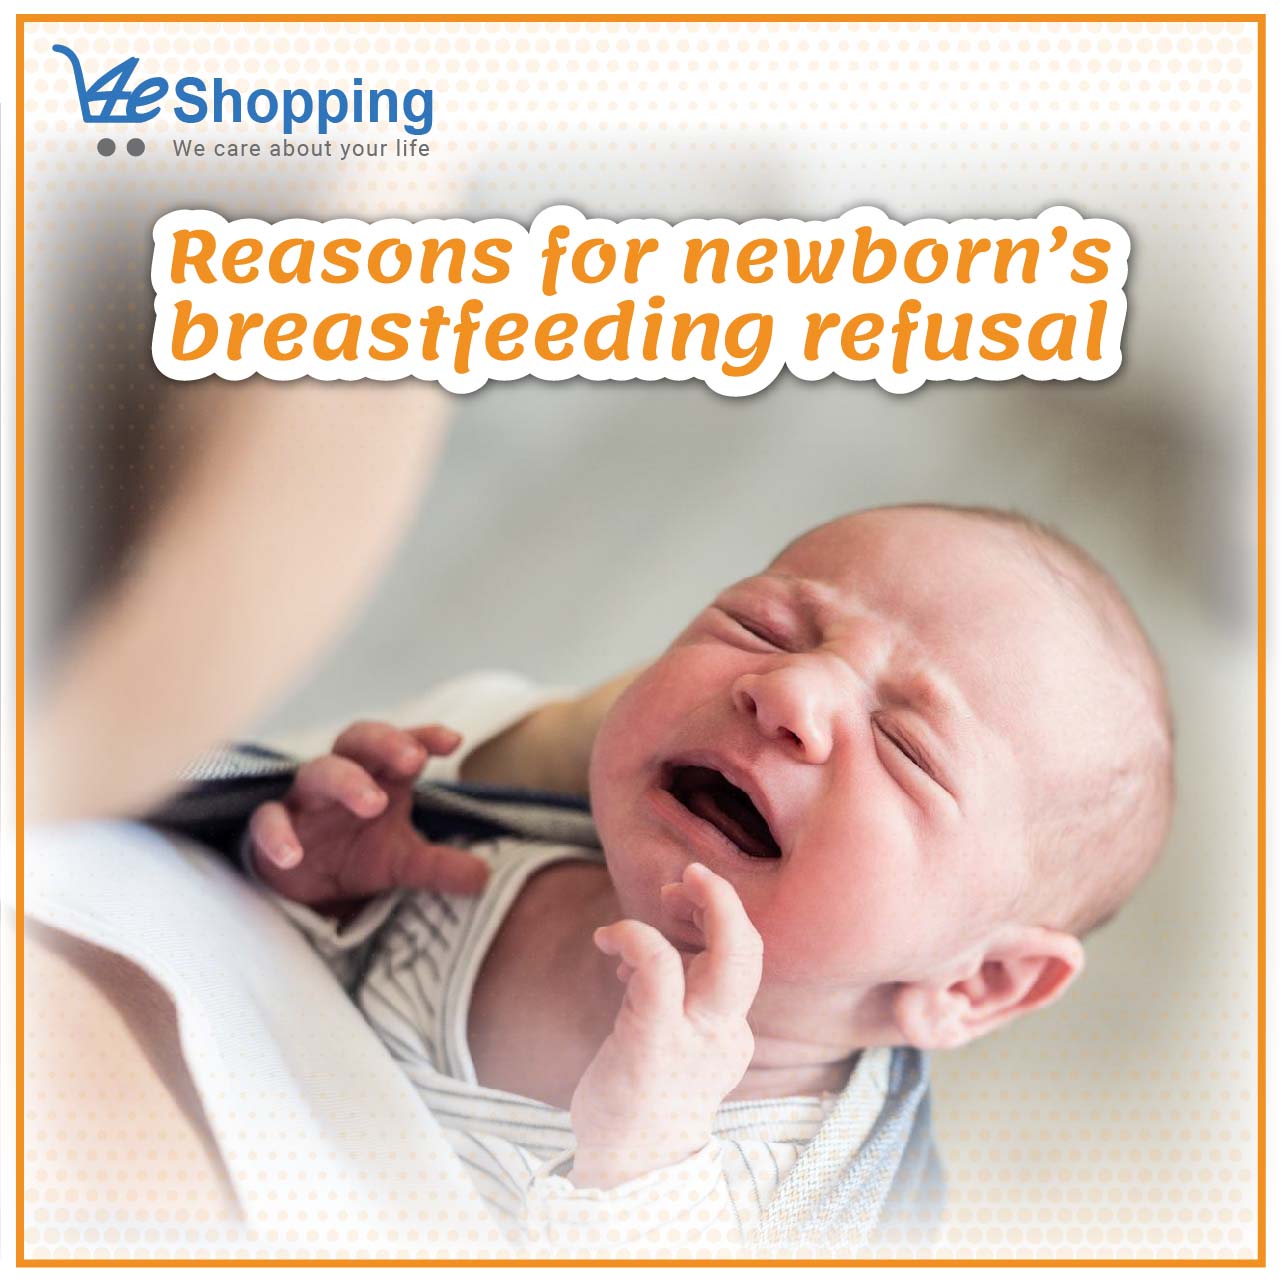 Reasons for newborn’s breastfeeding refusal